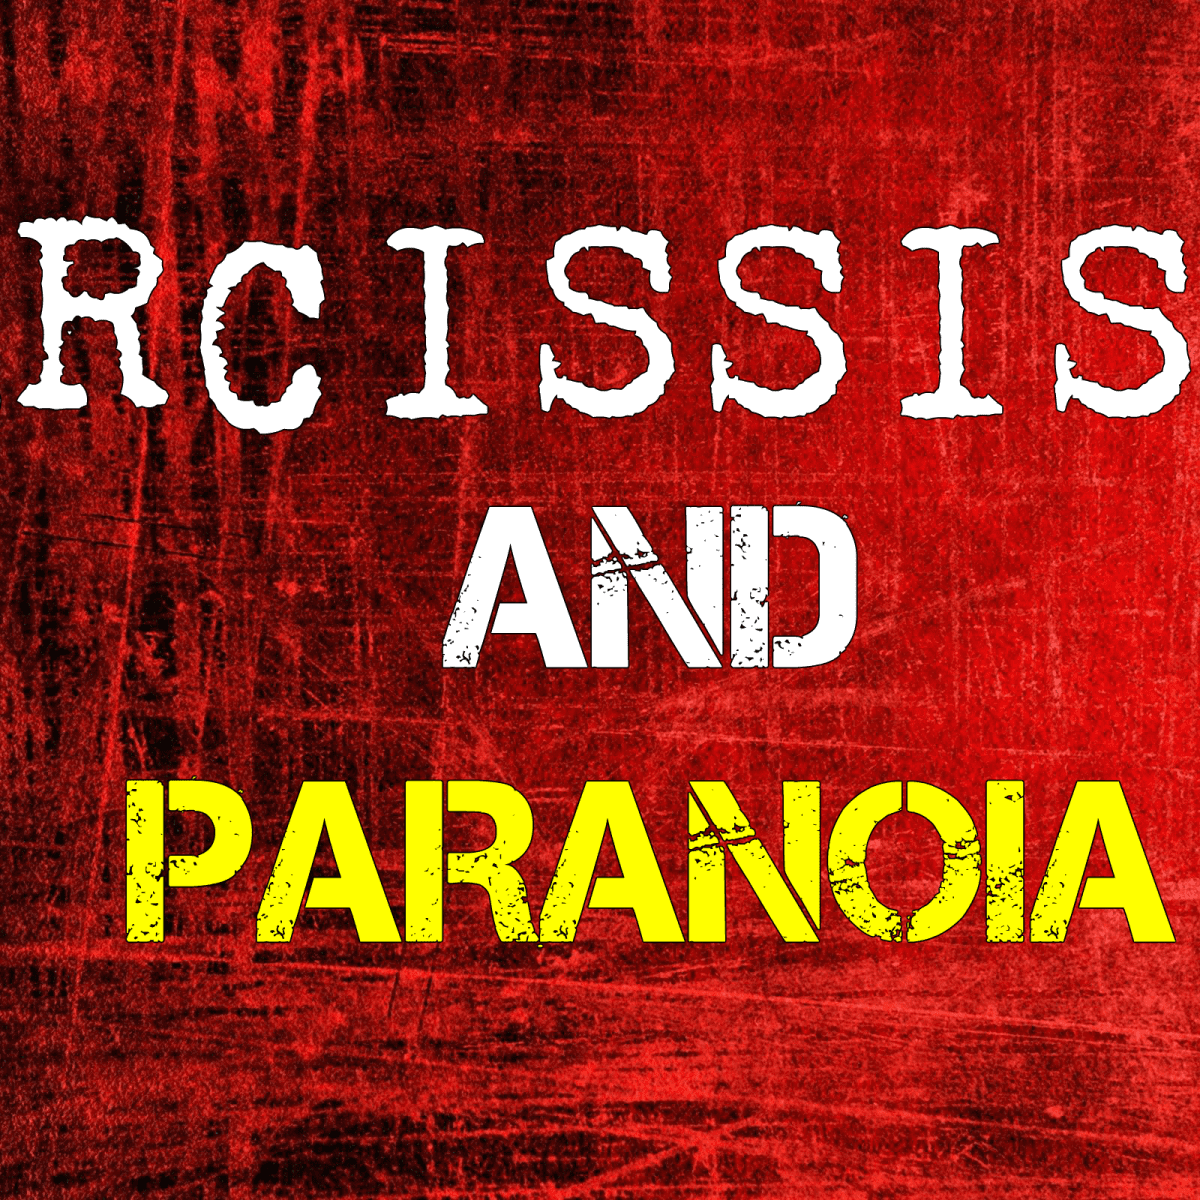 Paranoia si narcisistul